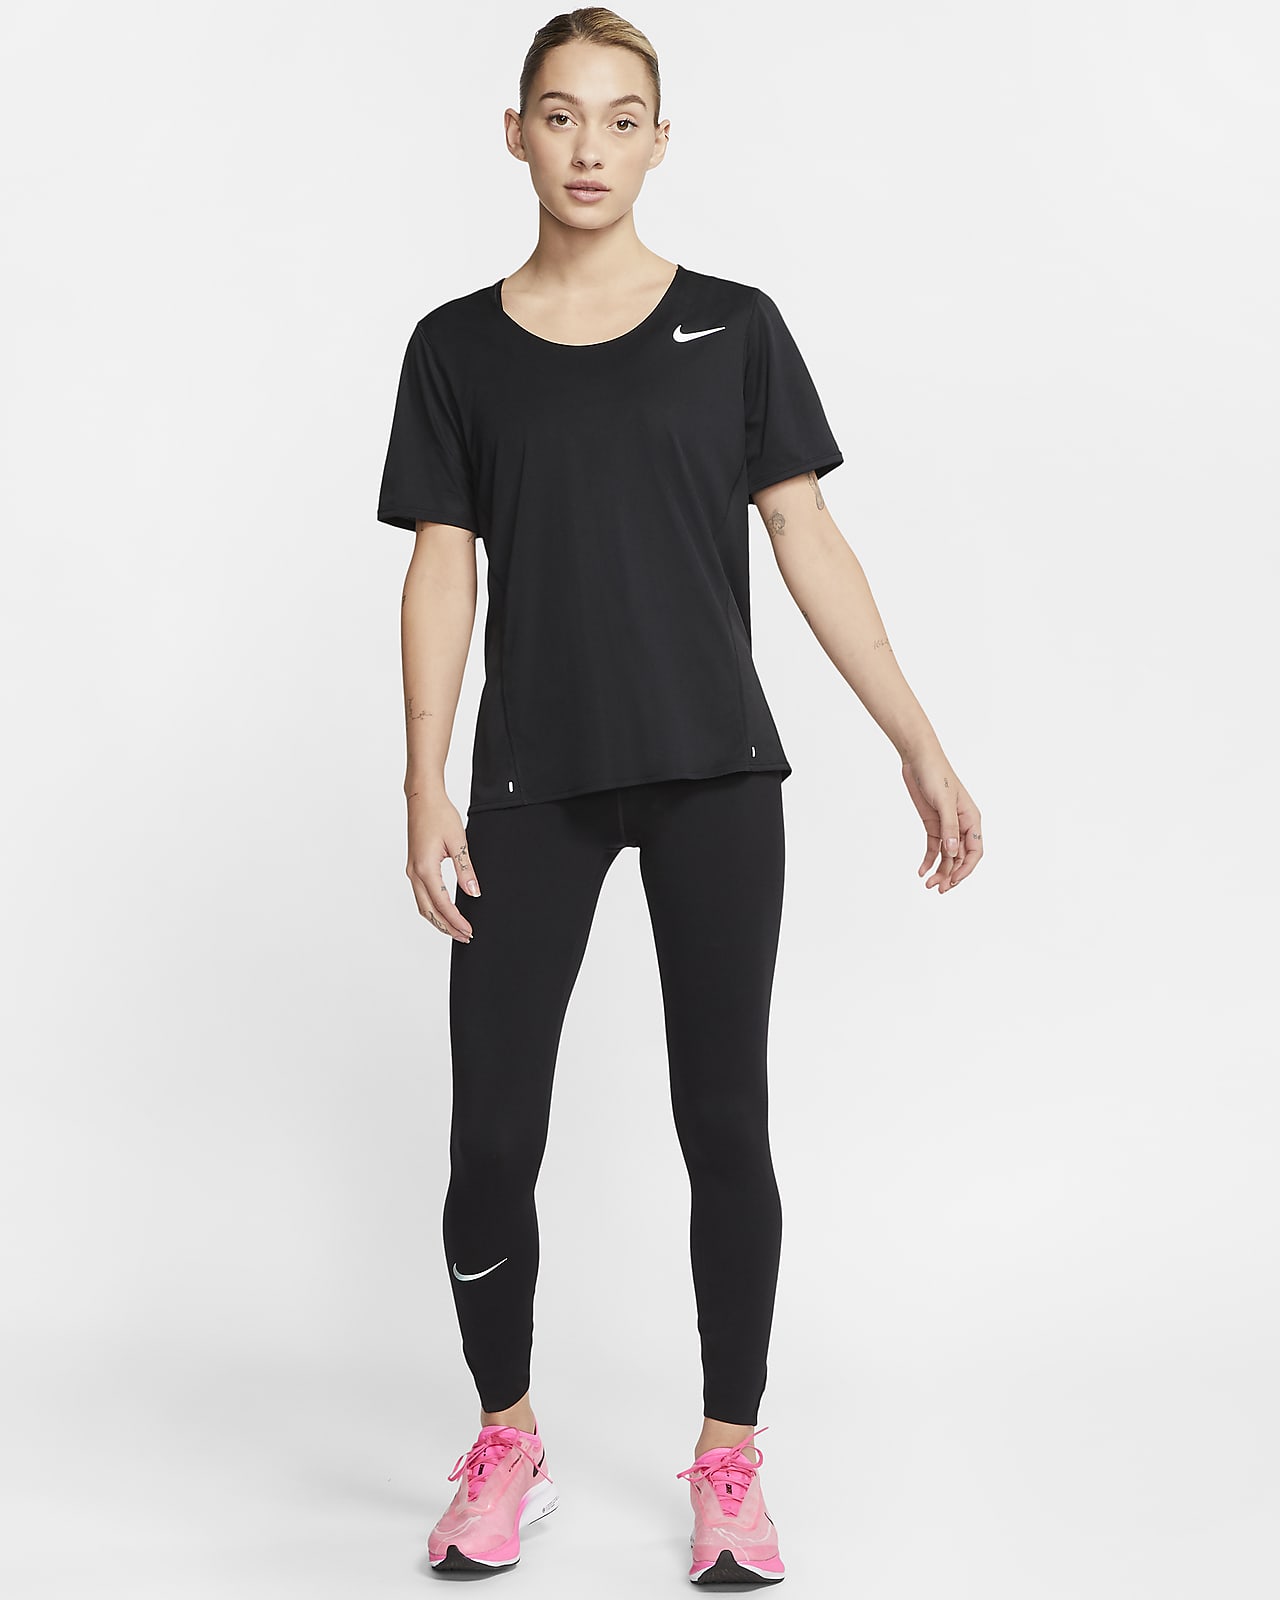 Nike City Sleek Women's Short-Sleeve Running Top.